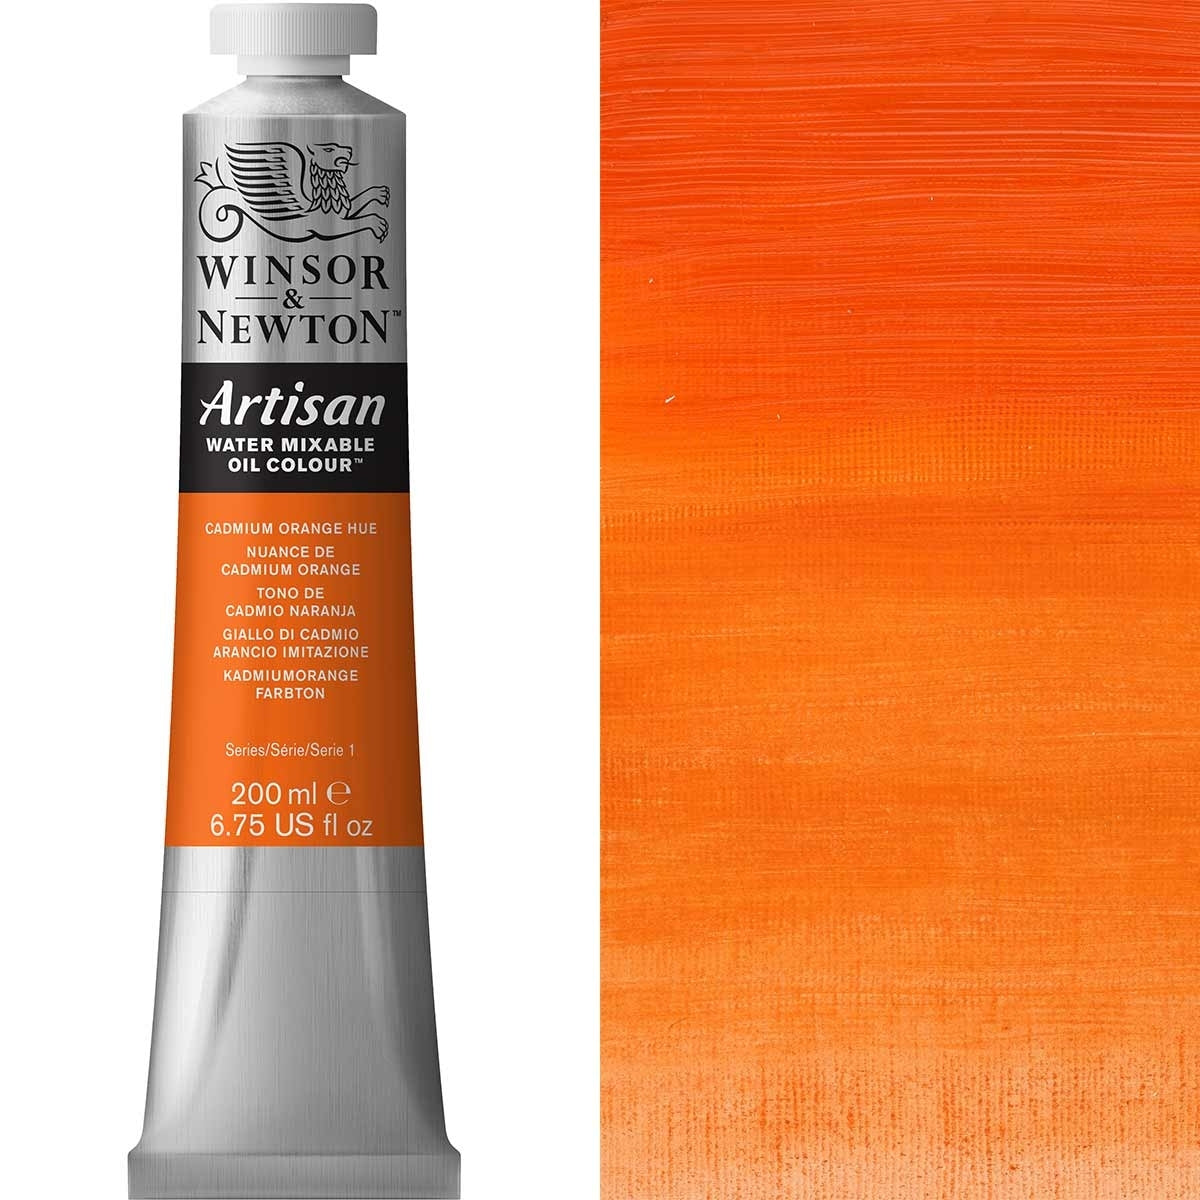 Winsor and Newton - Artisan Oil Colour Watermixable - 200ml - Cadmium Orange Hue